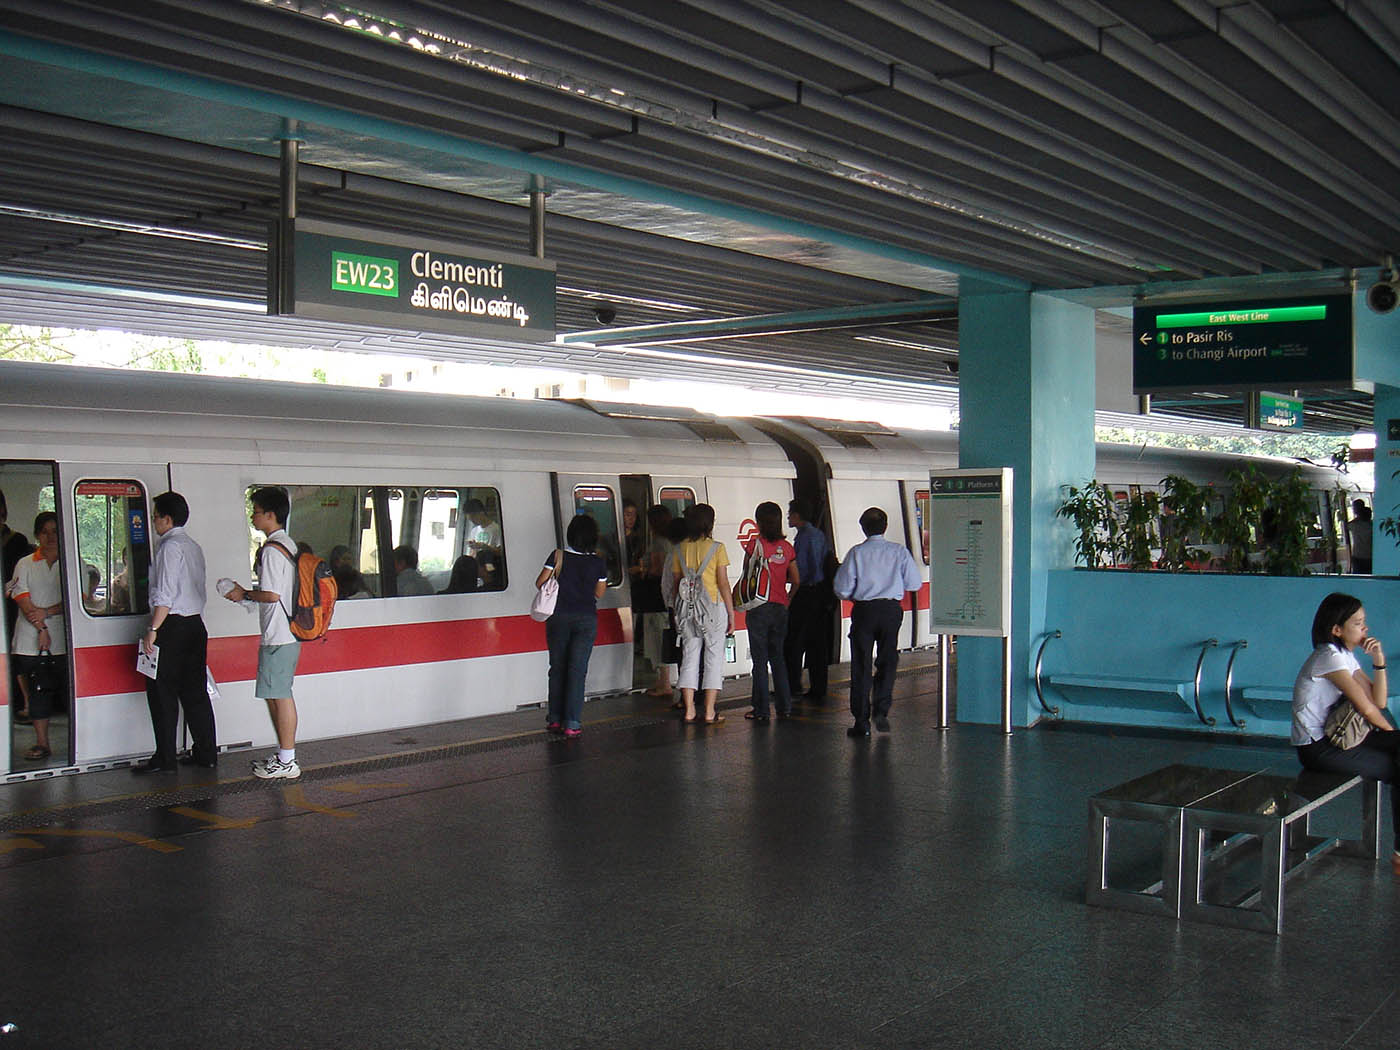 Clementi MRT Station - - Platform